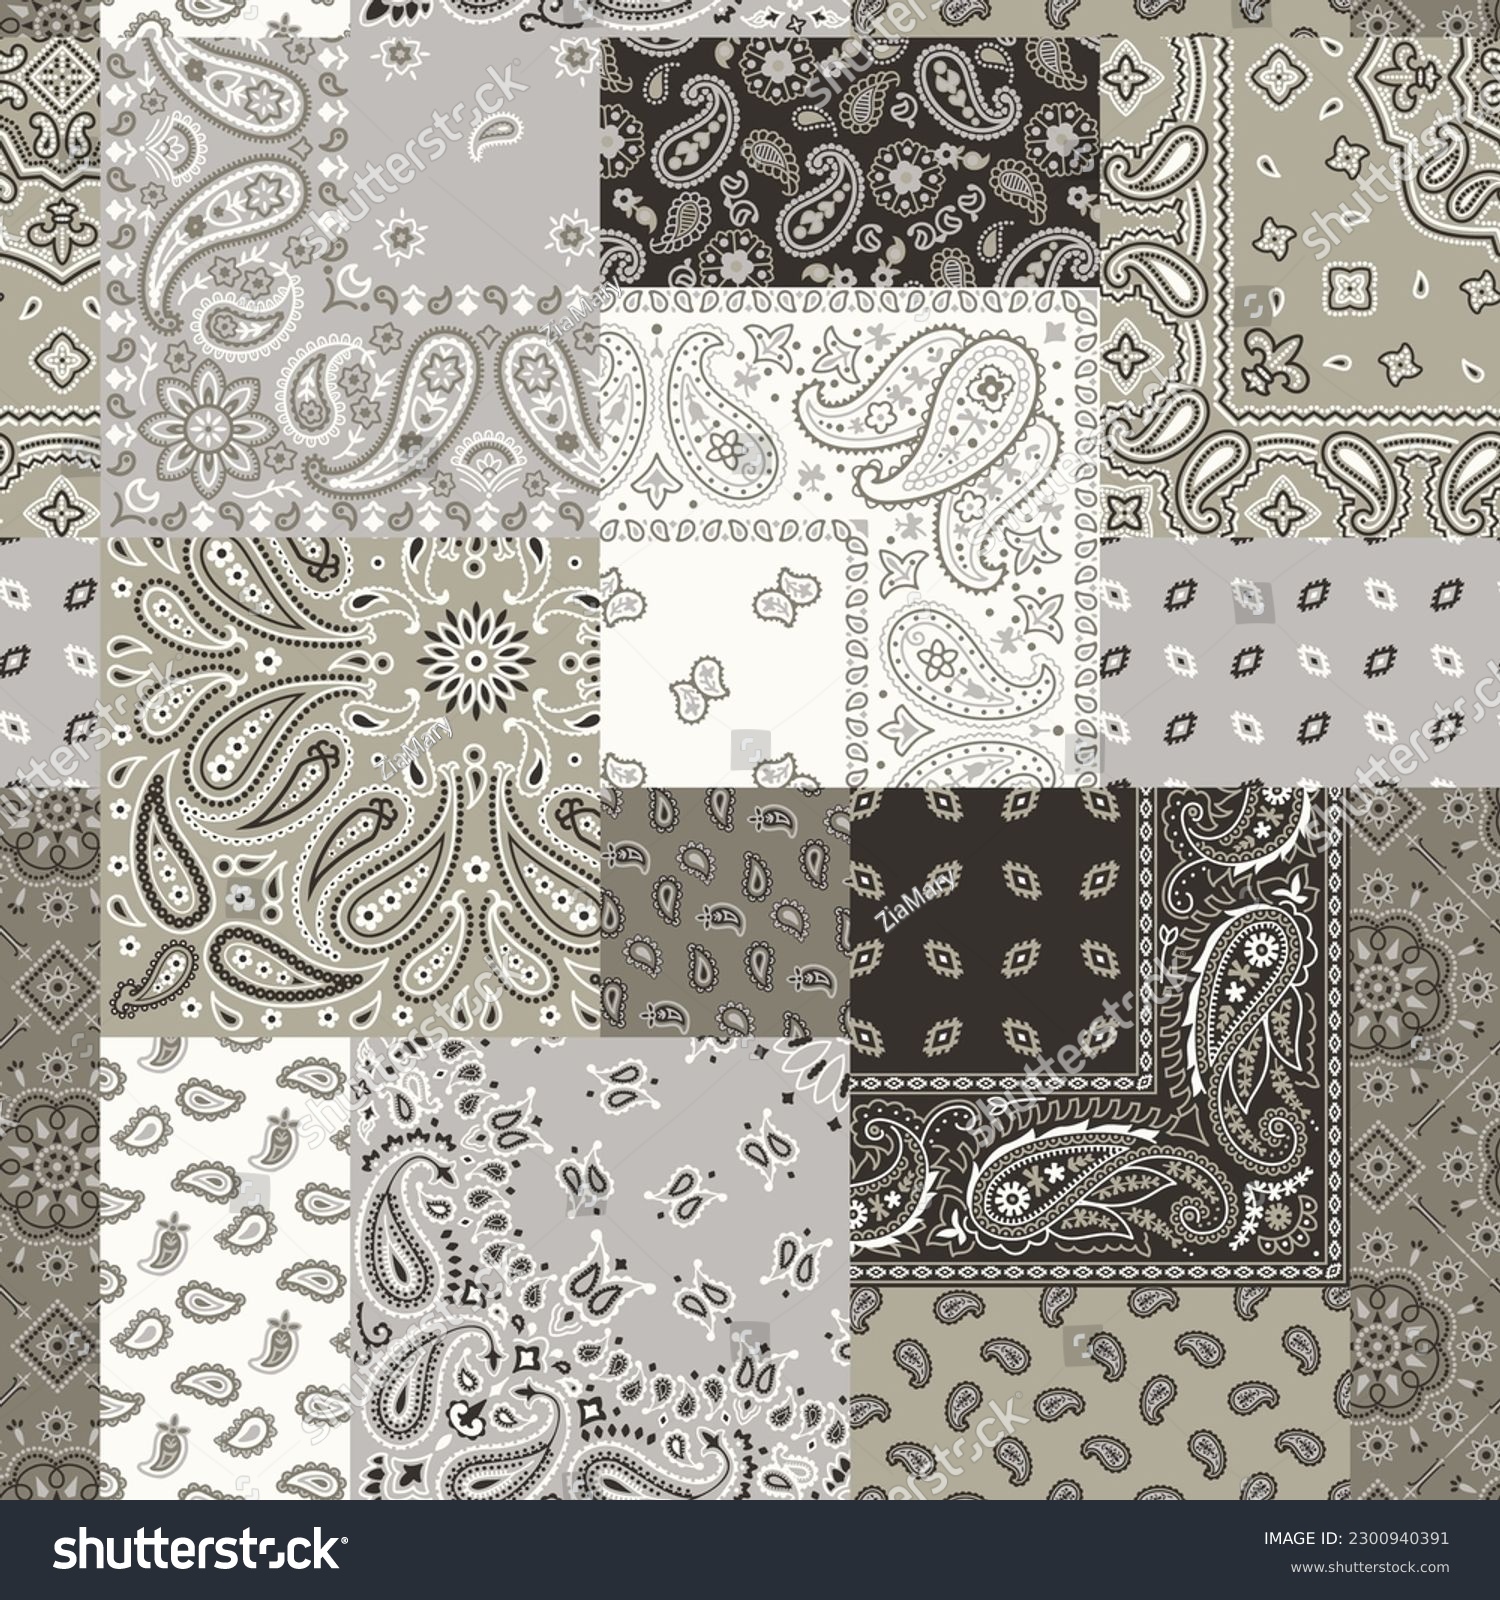 SVG of Paisley bandana fabric patchwork wallpaper vintage vector seamless pattern svg